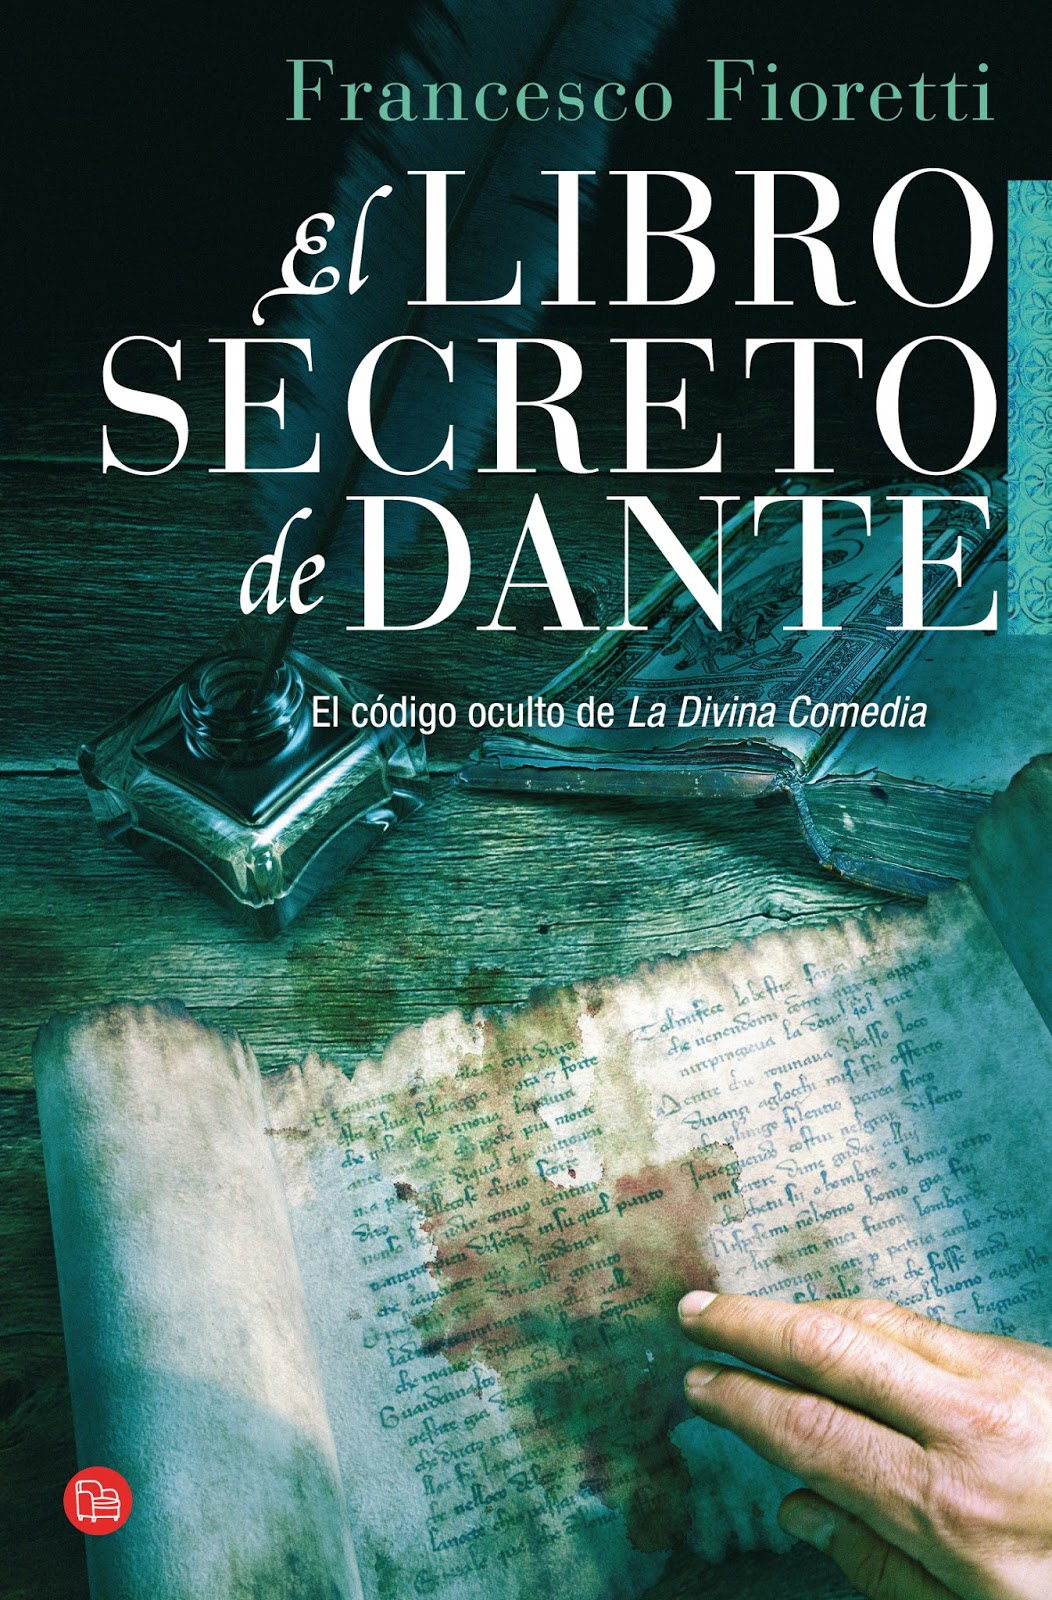 El Libro Secreto de Dante, de Francesco Fioretti | Las ...